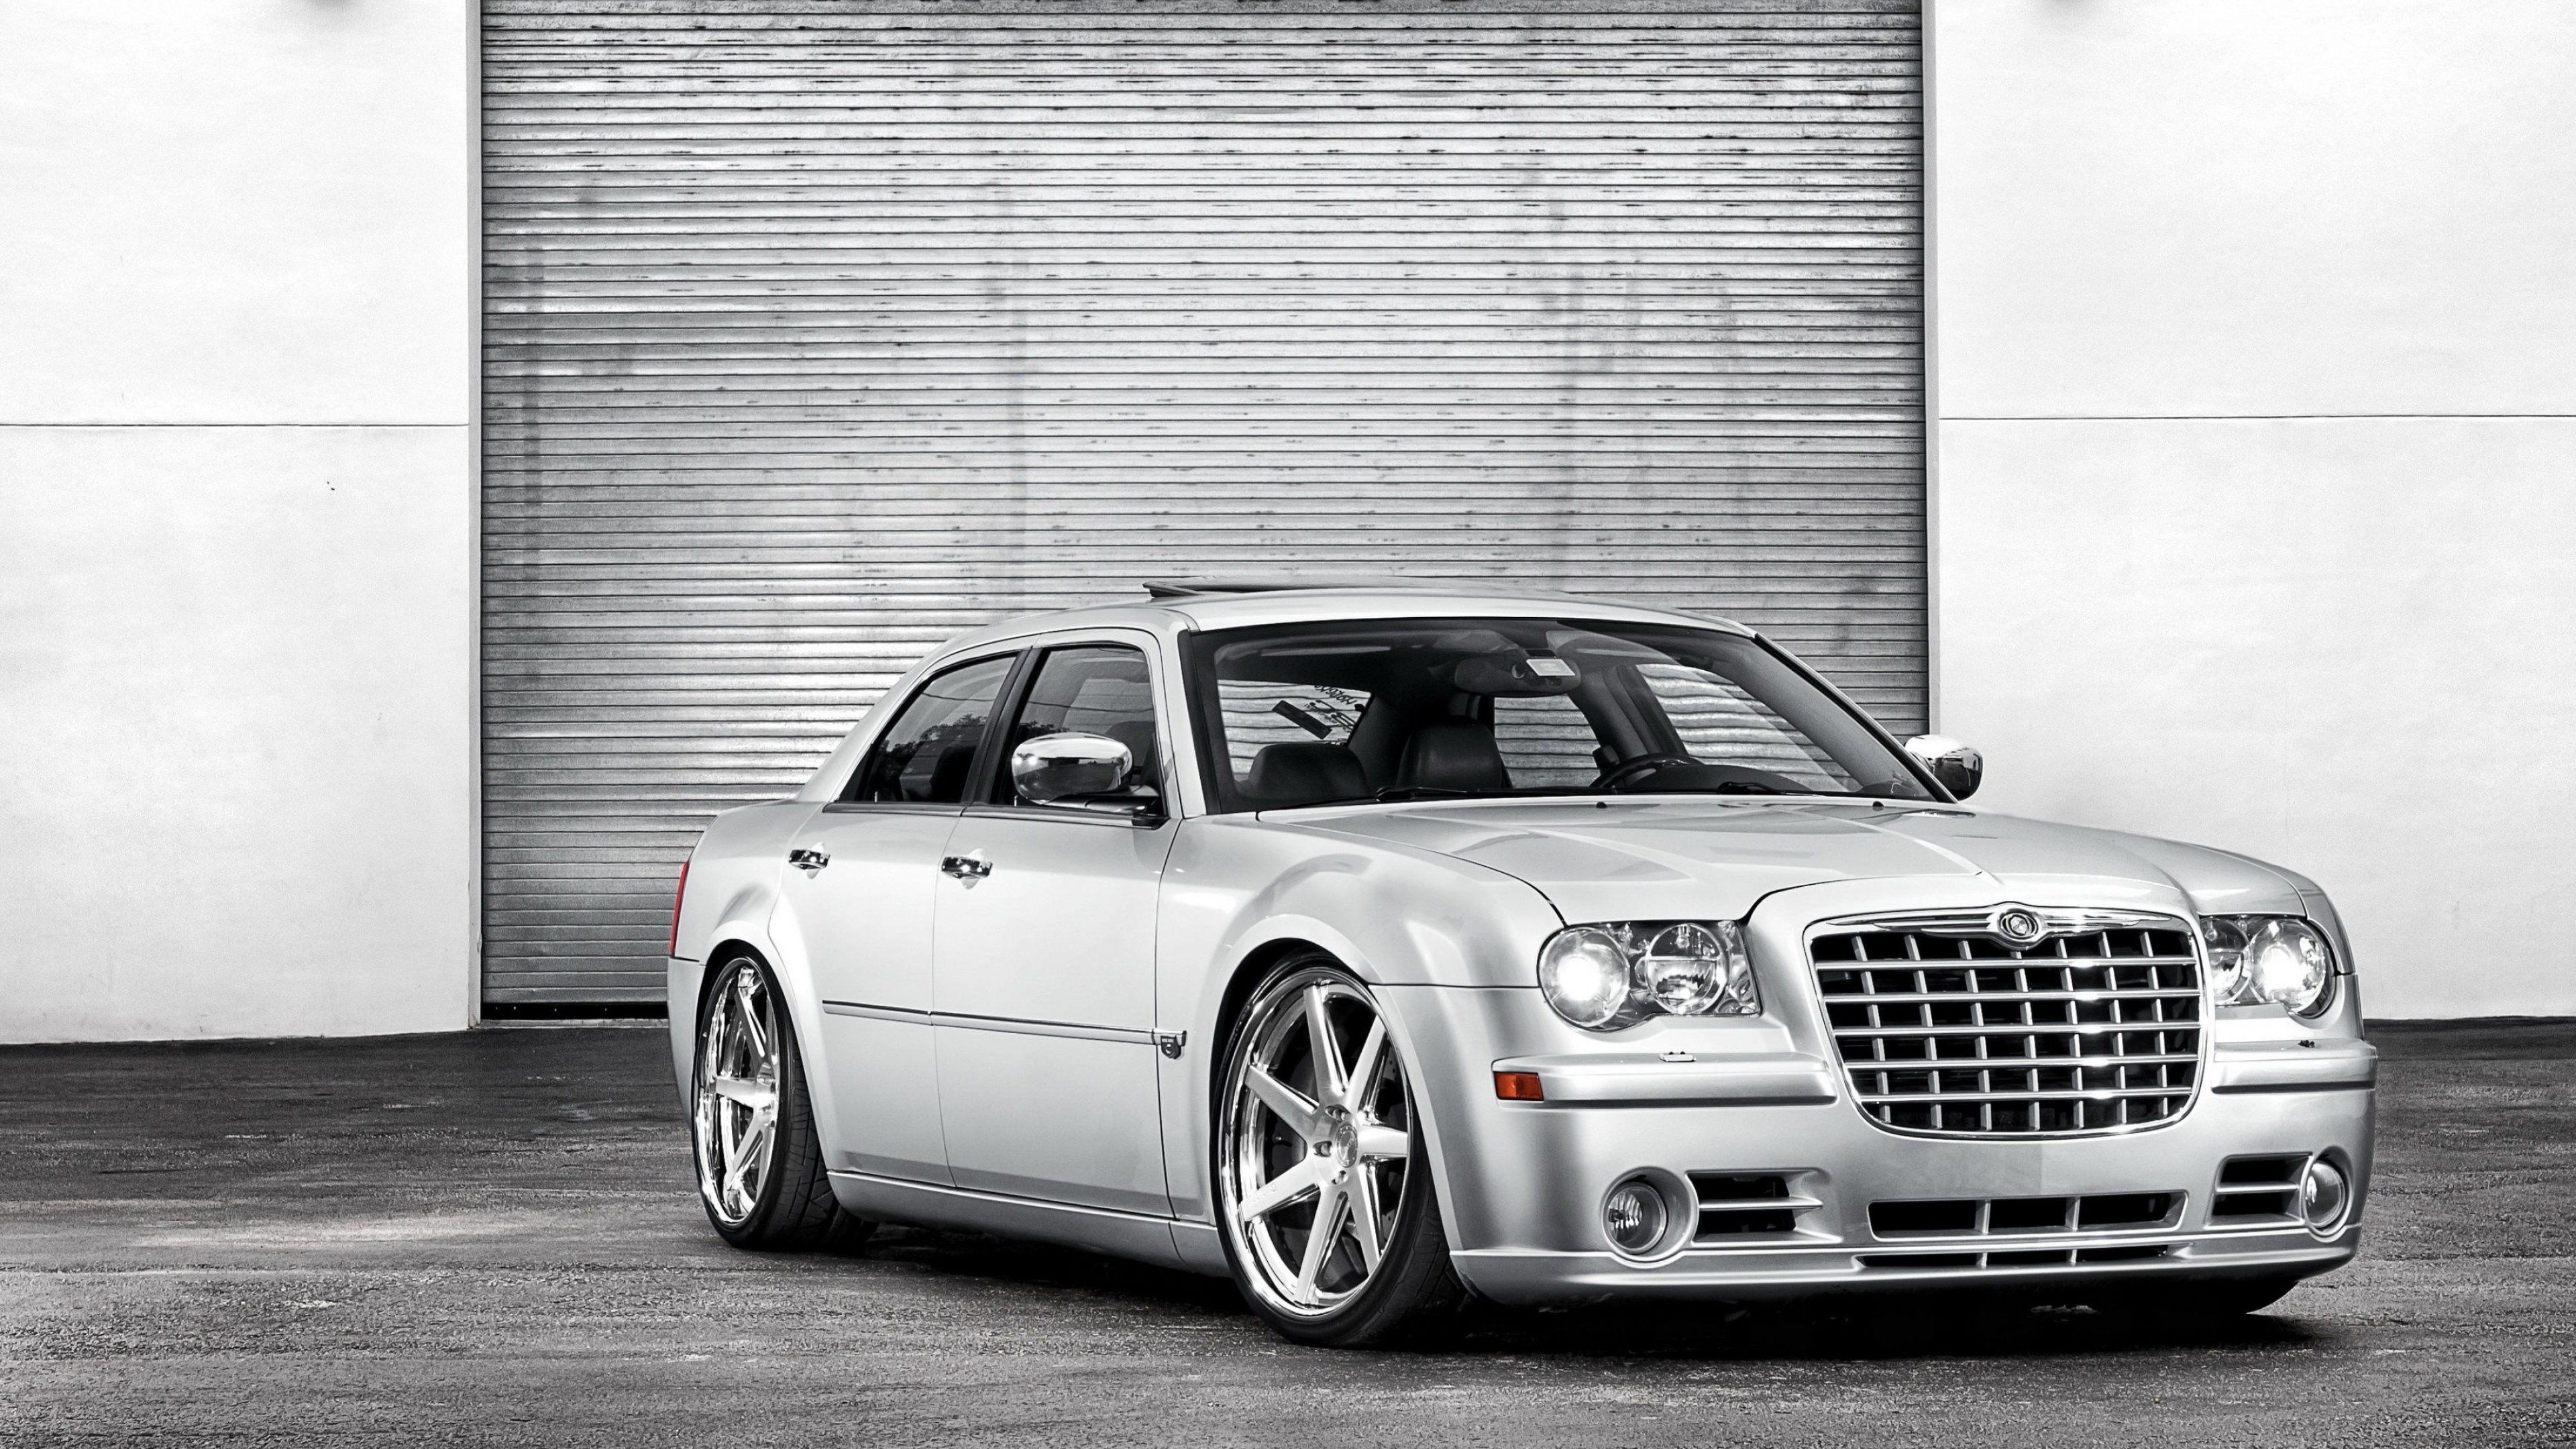 Chrysler 300, Premium luxury, Elegant design, High-quality wallpapers, 3840x2160 4K Desktop